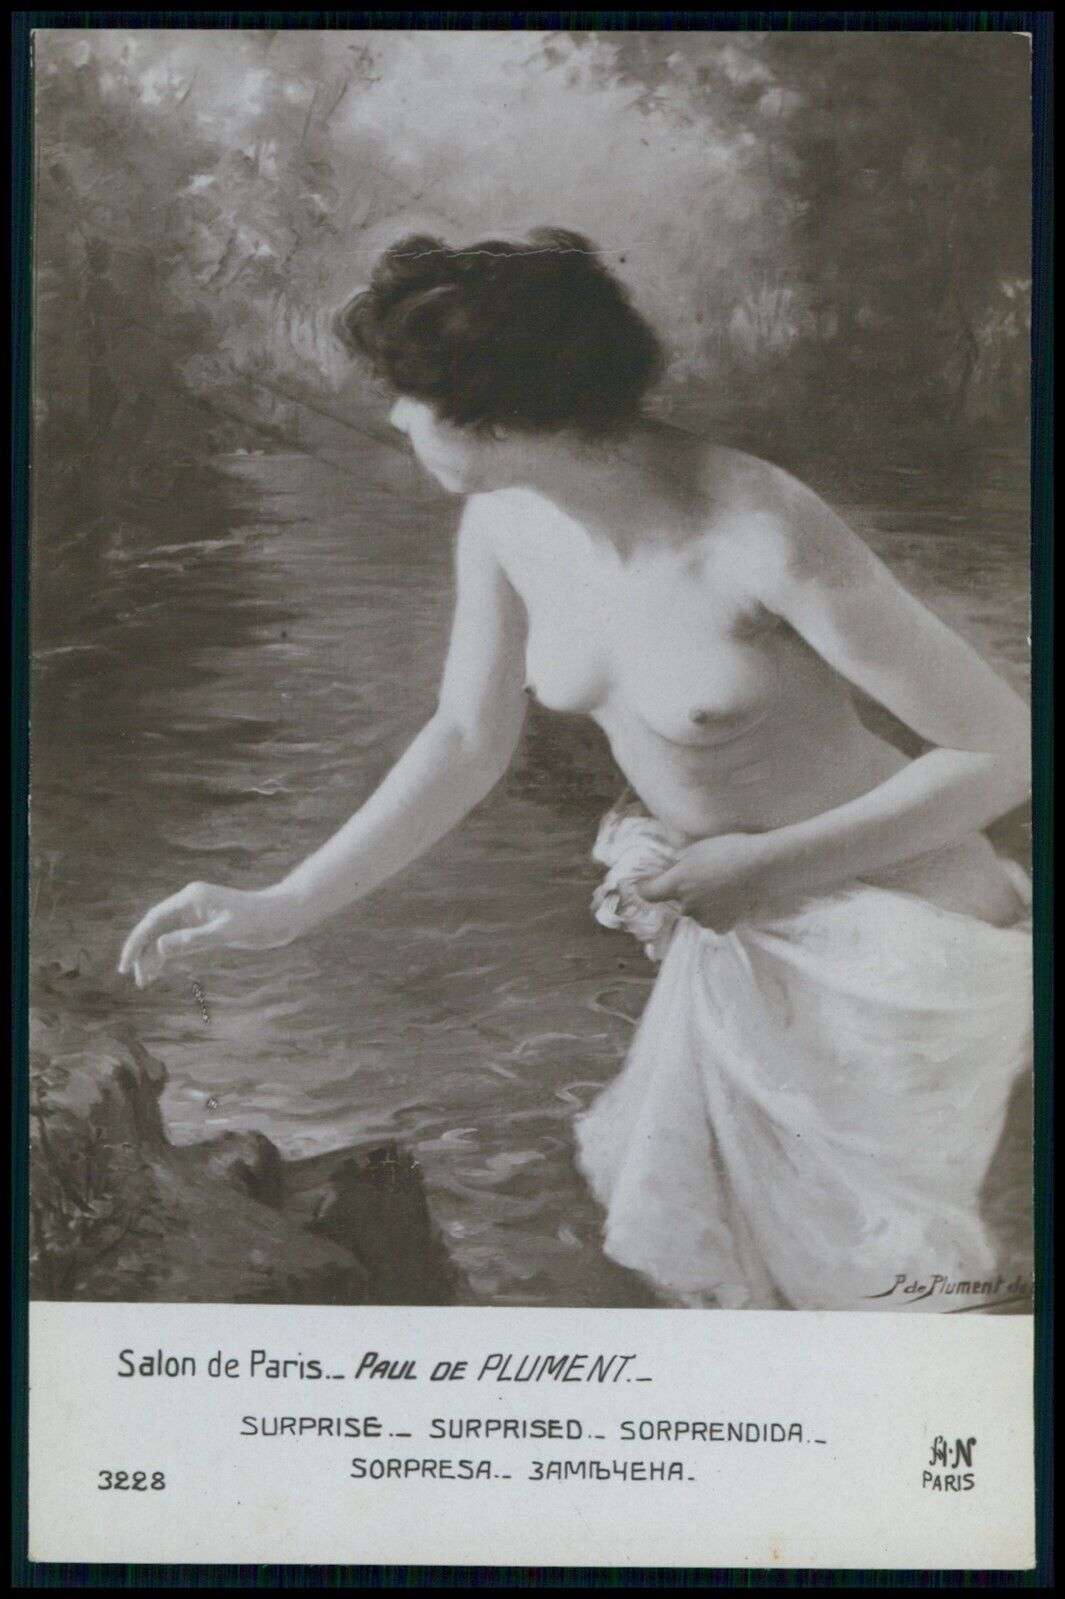 art Plument nude woman nudist original old 1910s Salon de Paris French postcard